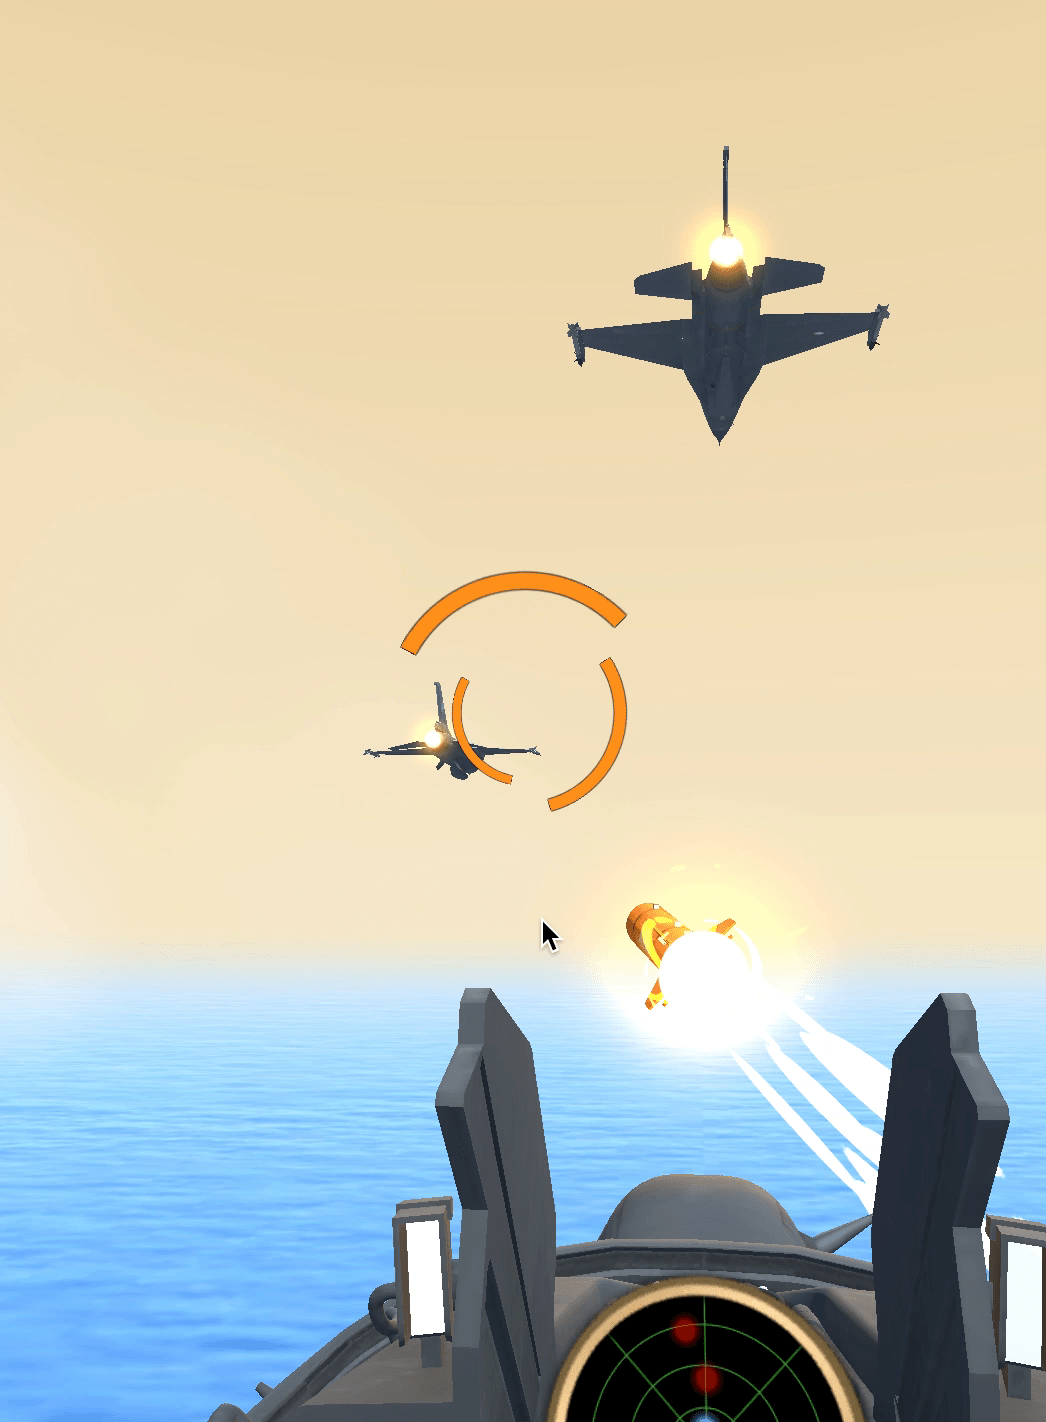 Air Strike - War Plane Simulator Screenshot 6